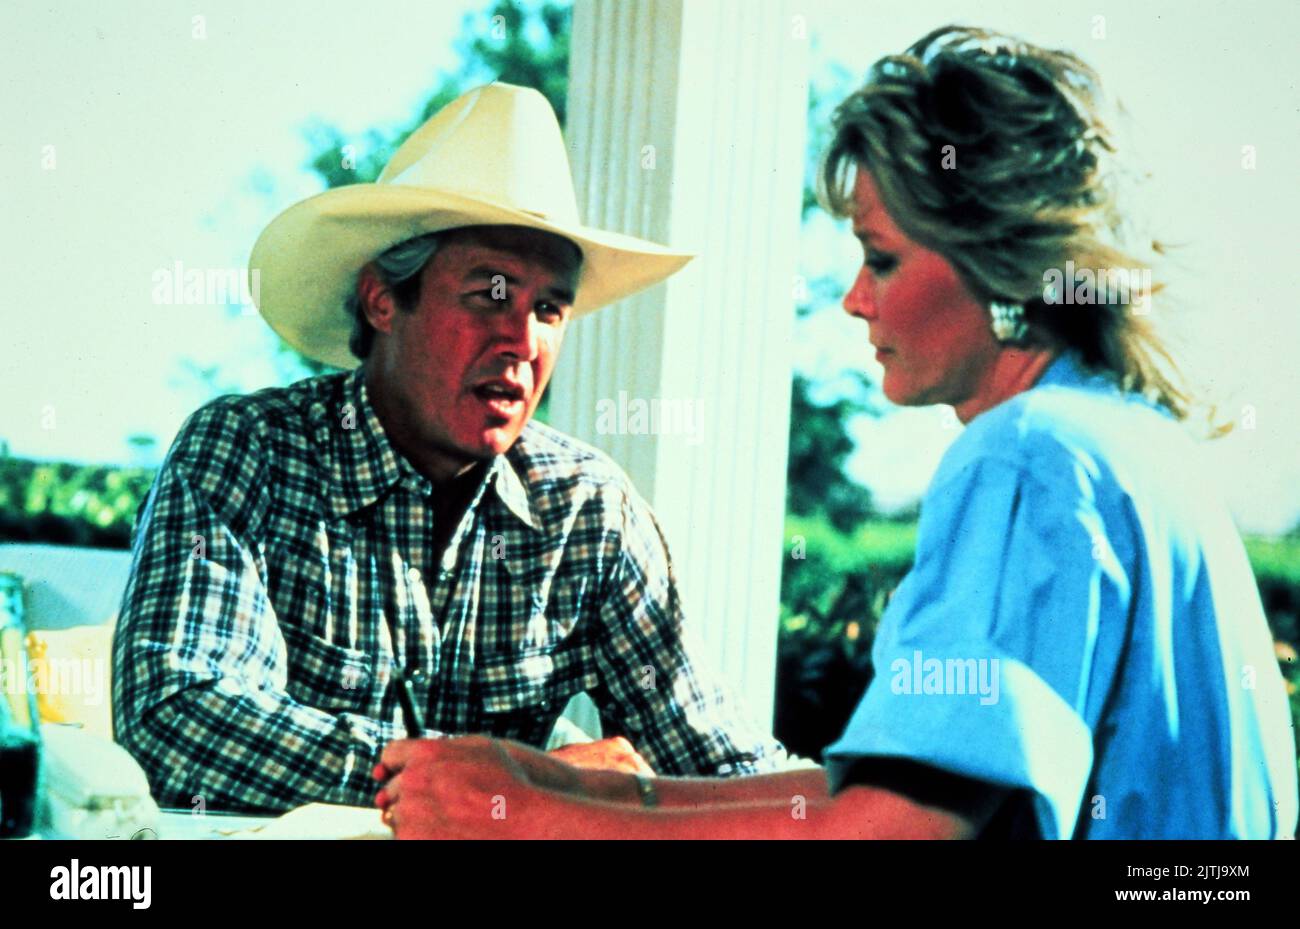 Dallas, Fernsehserie, USA 1978 - 1991, Darsteller: Steve Kanaly, Linda Gray Foto Stock